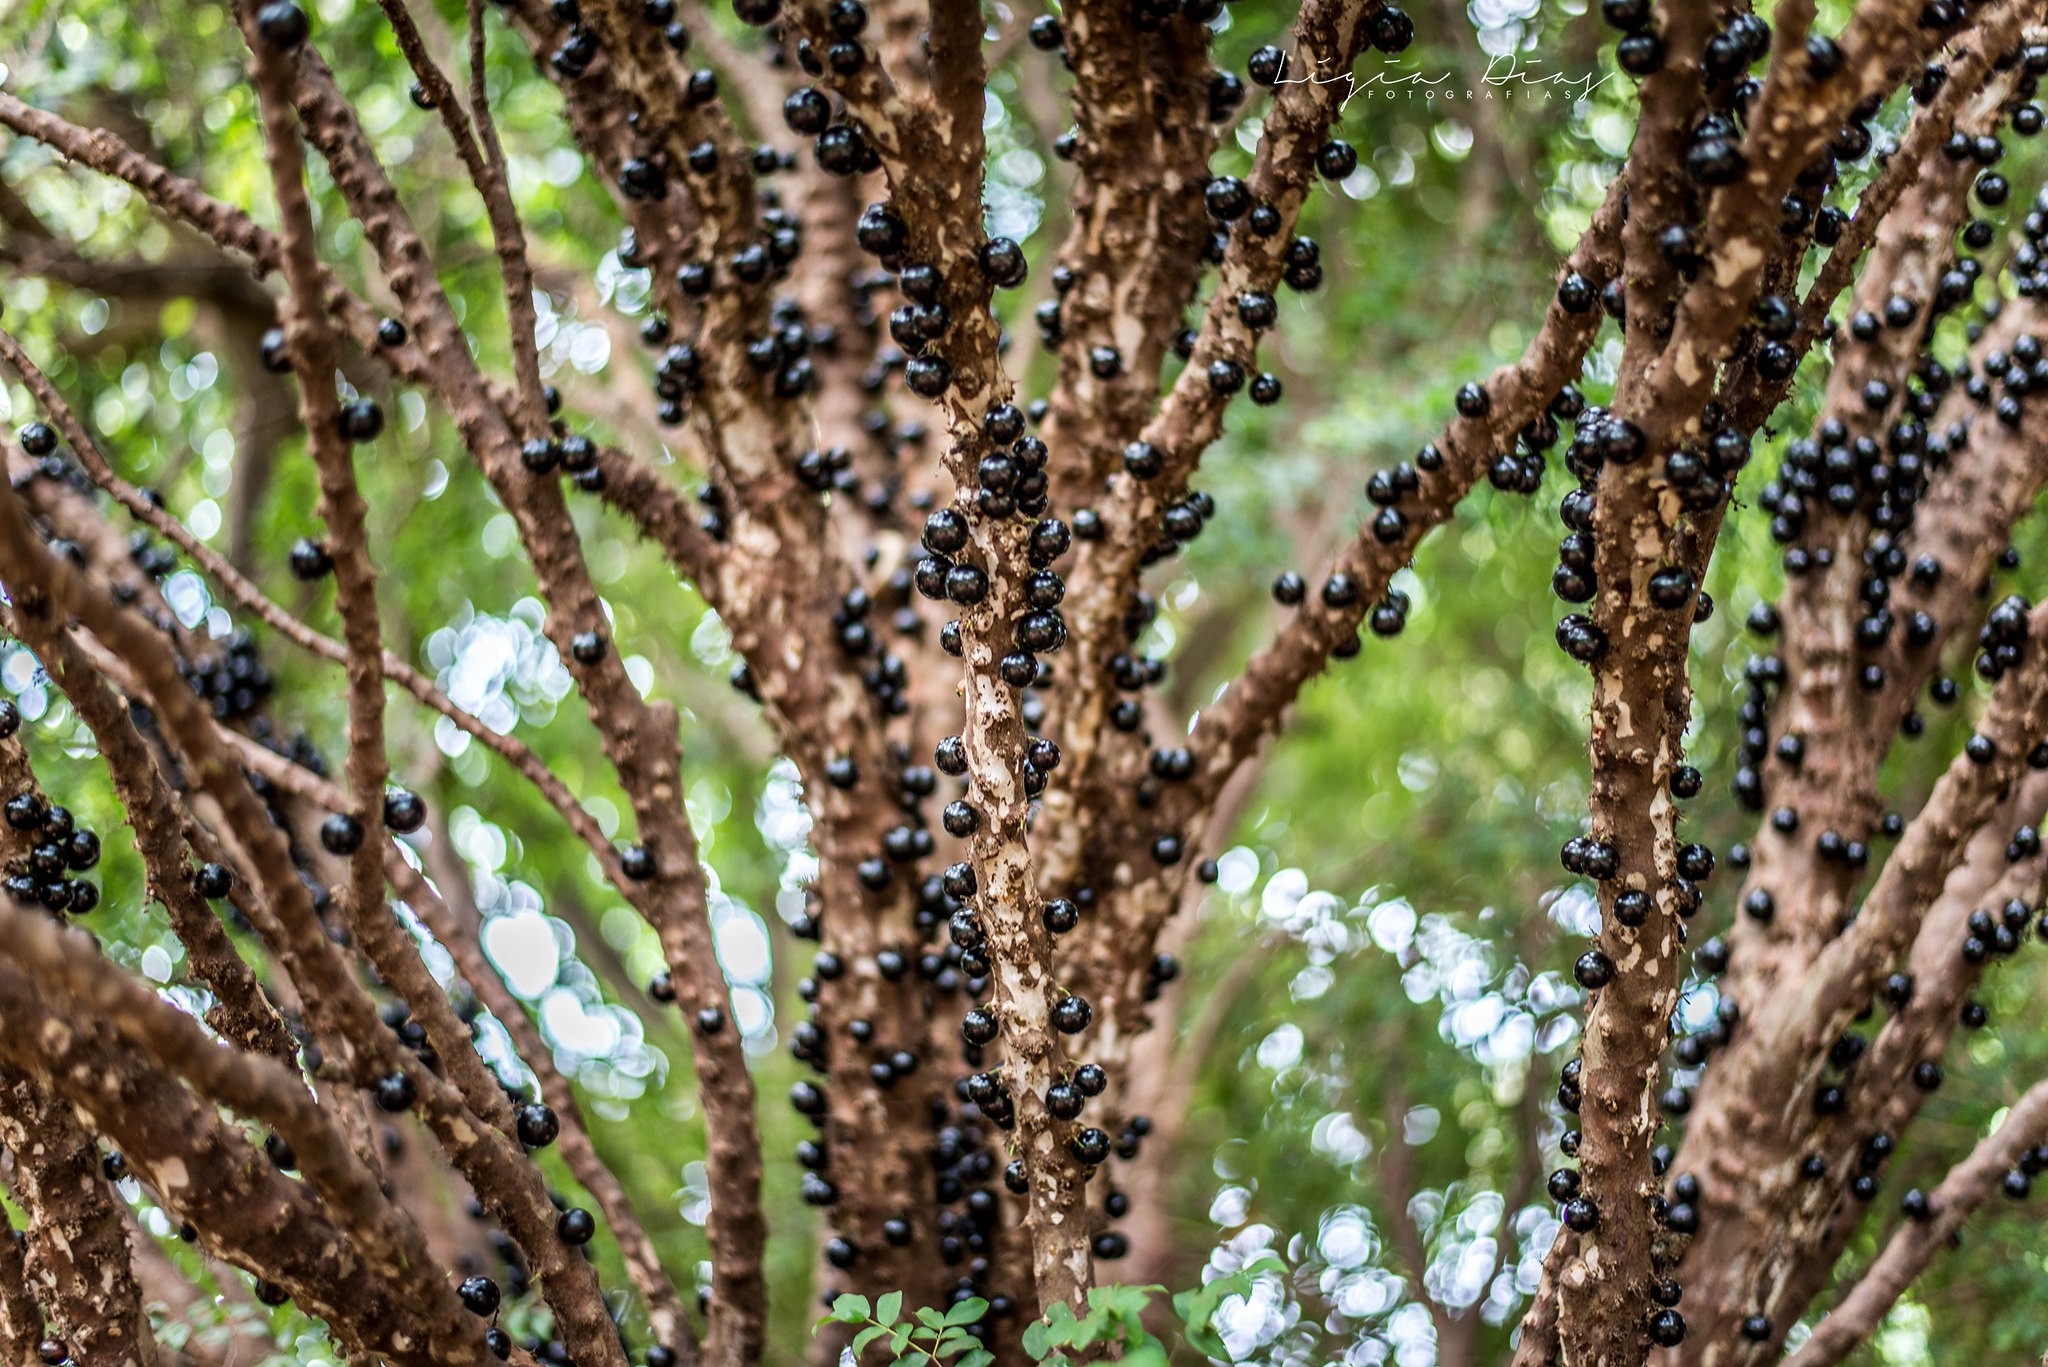 Natural da Mata Atlântica, a jabuticabeira também pode ser cultivada dentro de casa (Foto: Flickr / Lígia Dias / CreativeCommons)